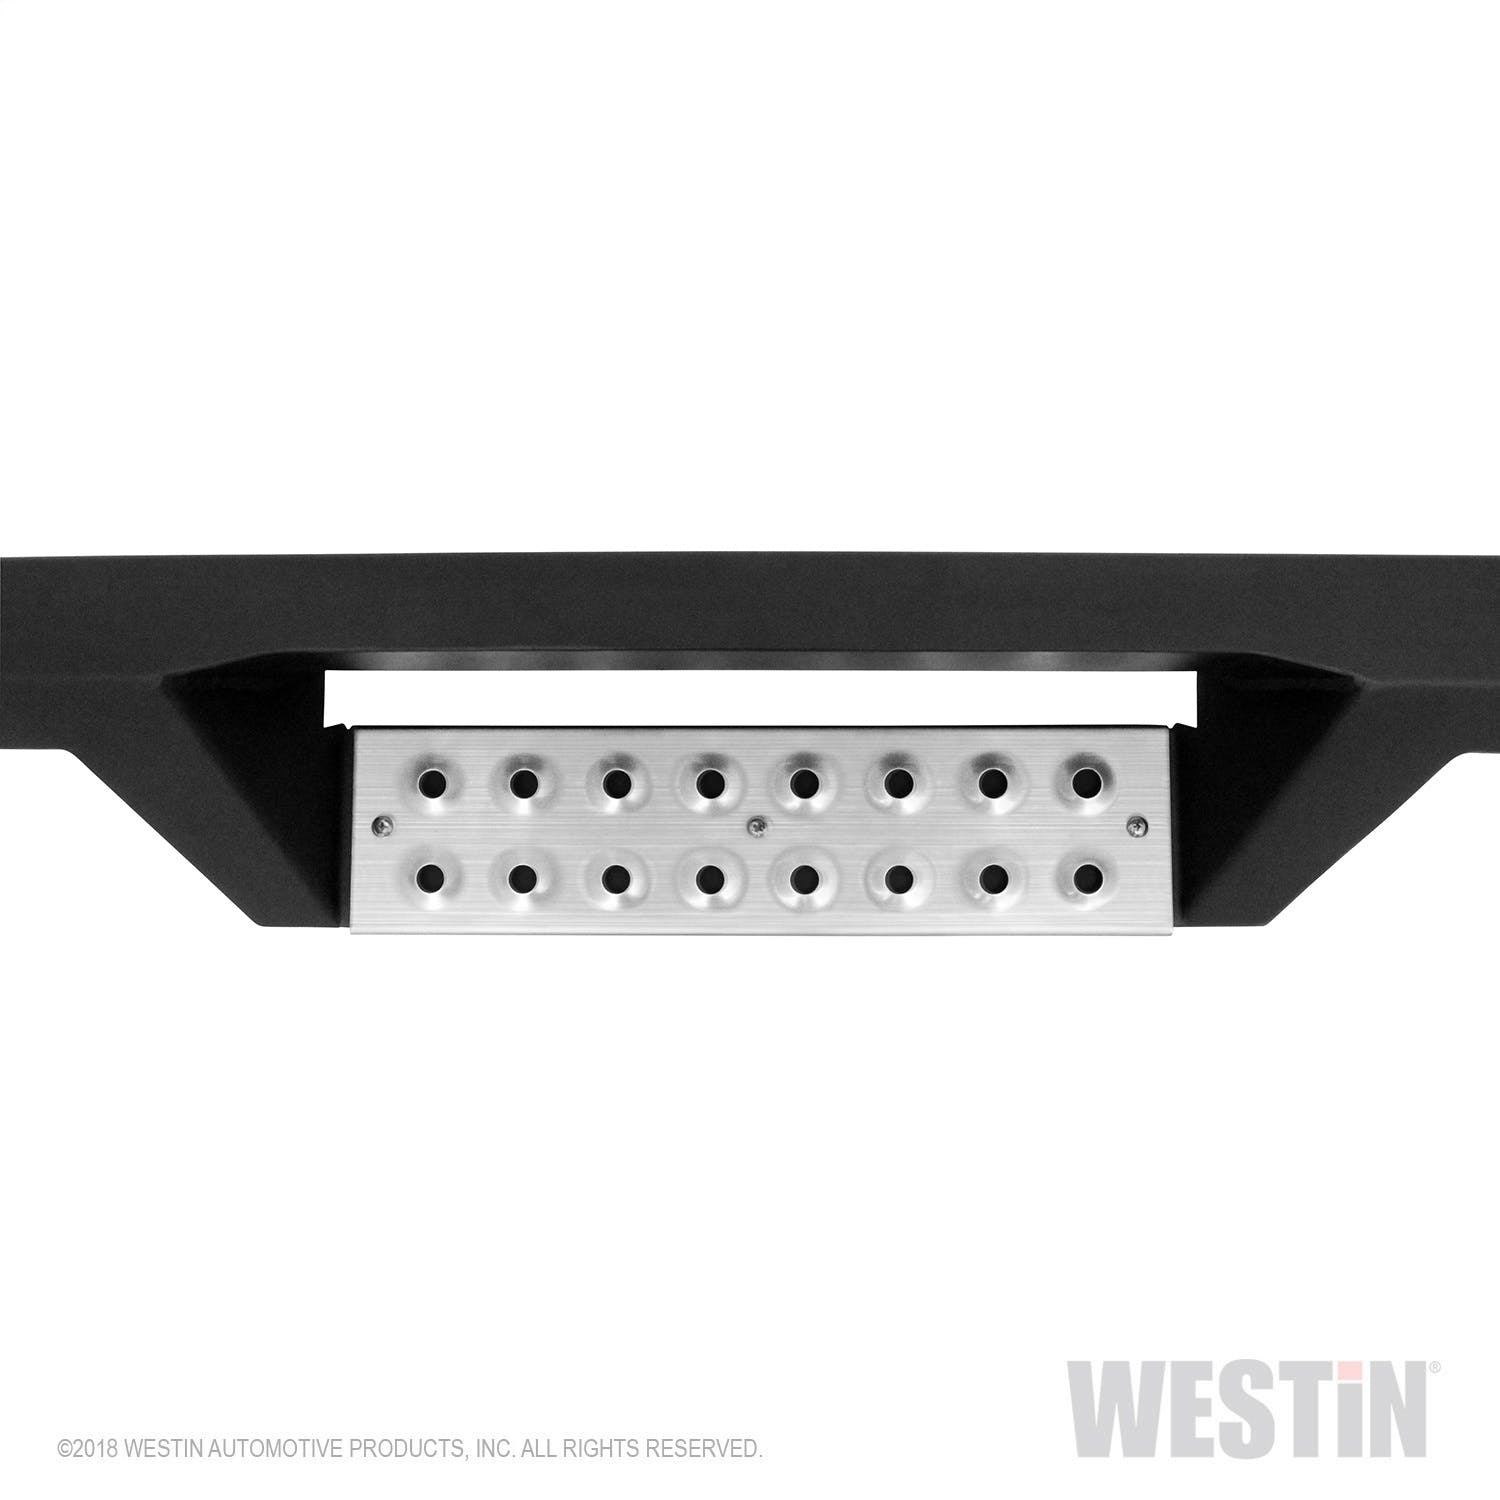 Westin Automotive 56-133152 HDX Stainless Drop Nerf Step Bars Textured Black